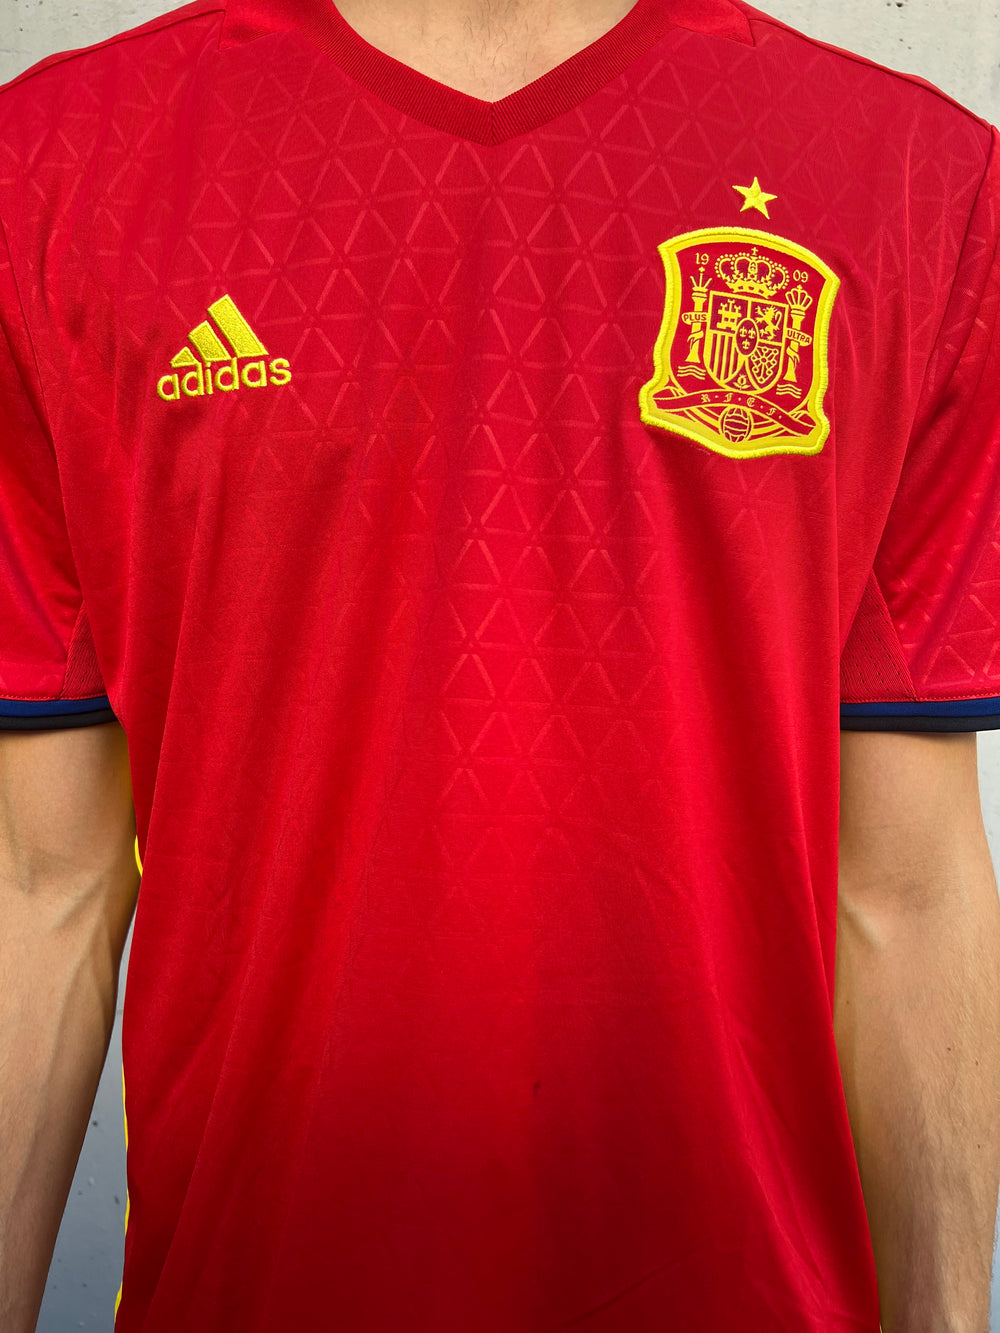 Adidas Spanien Spain National Team Football Fußball Trikot Jersey (L)